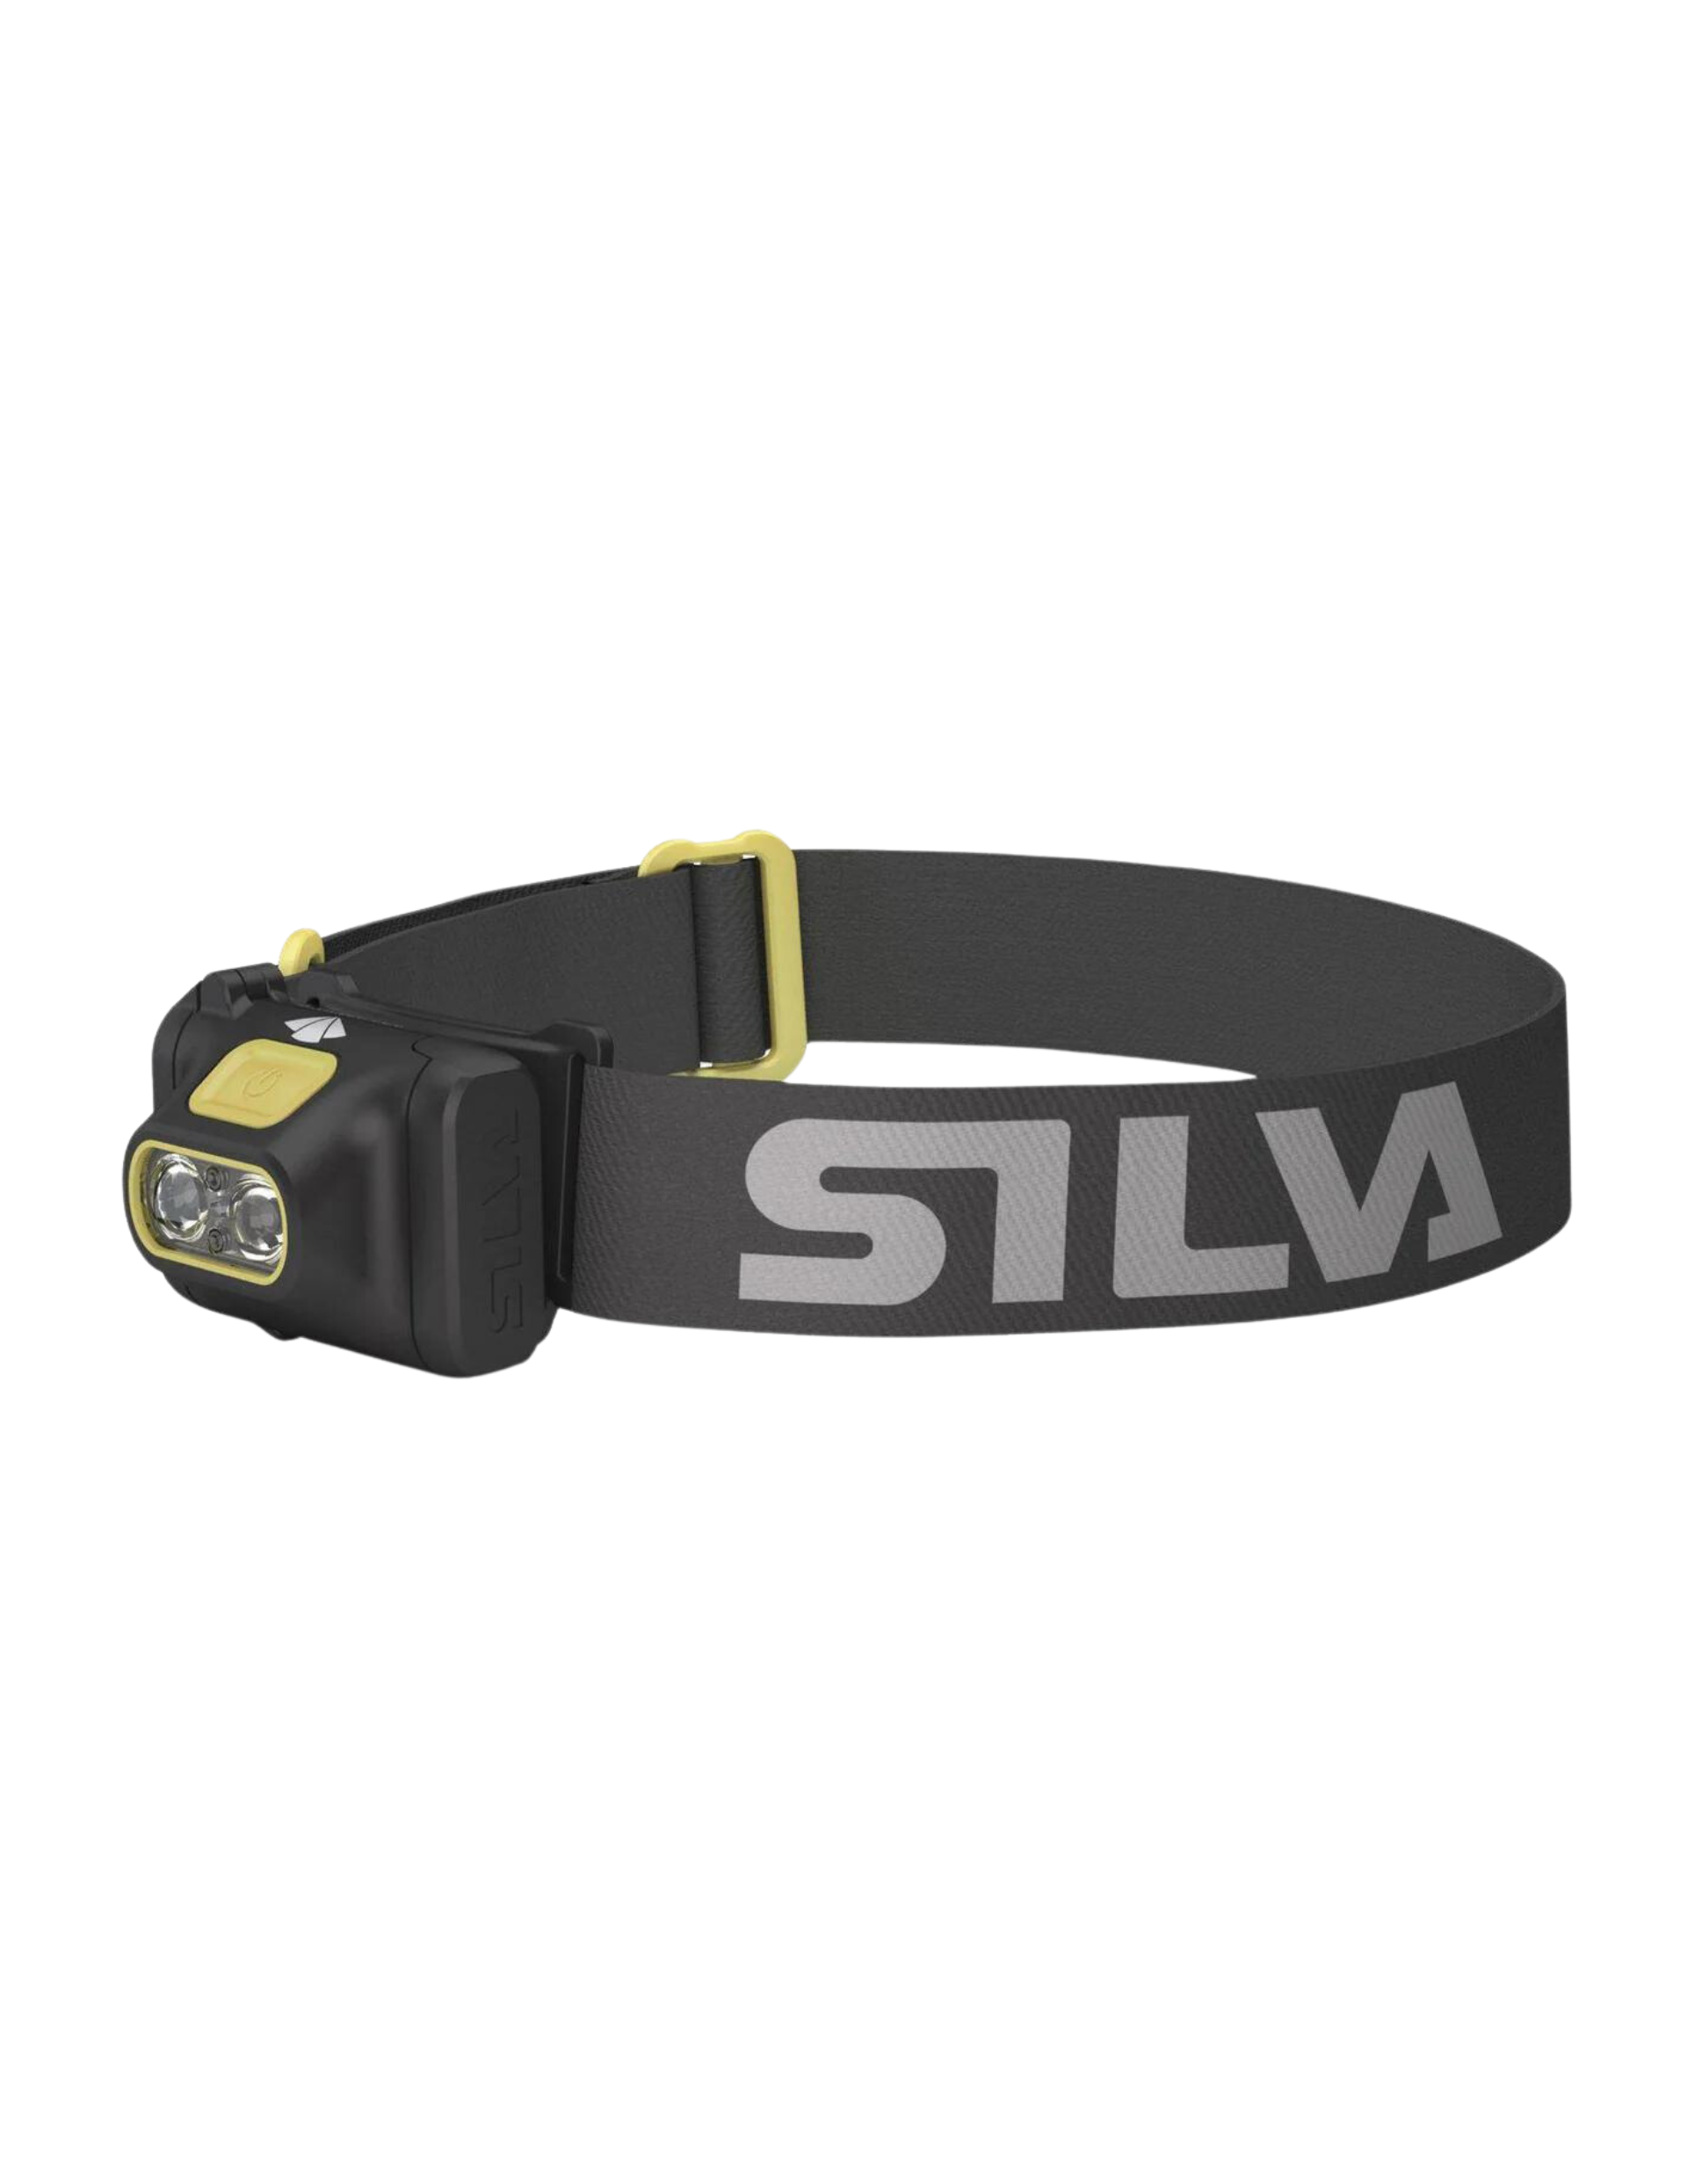 SILVA Lampe Frontale Silva Trail Runner Free 2 Hybrid - Muule